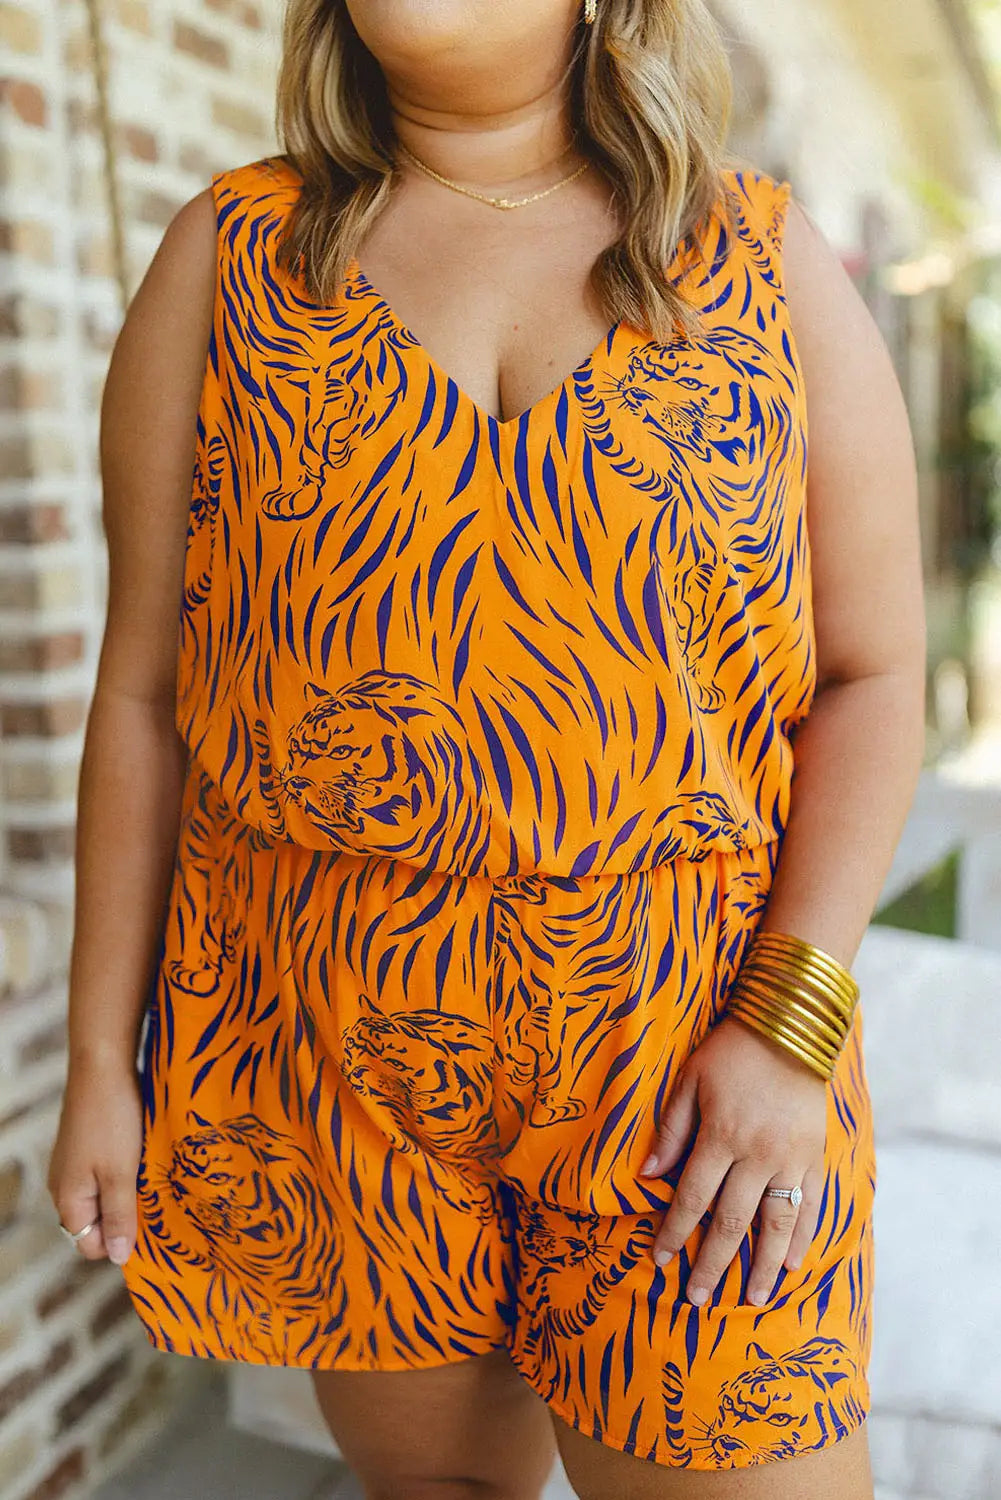 Yellow plus size tiger print sleeveless v neck romper - 1x 100% polyester